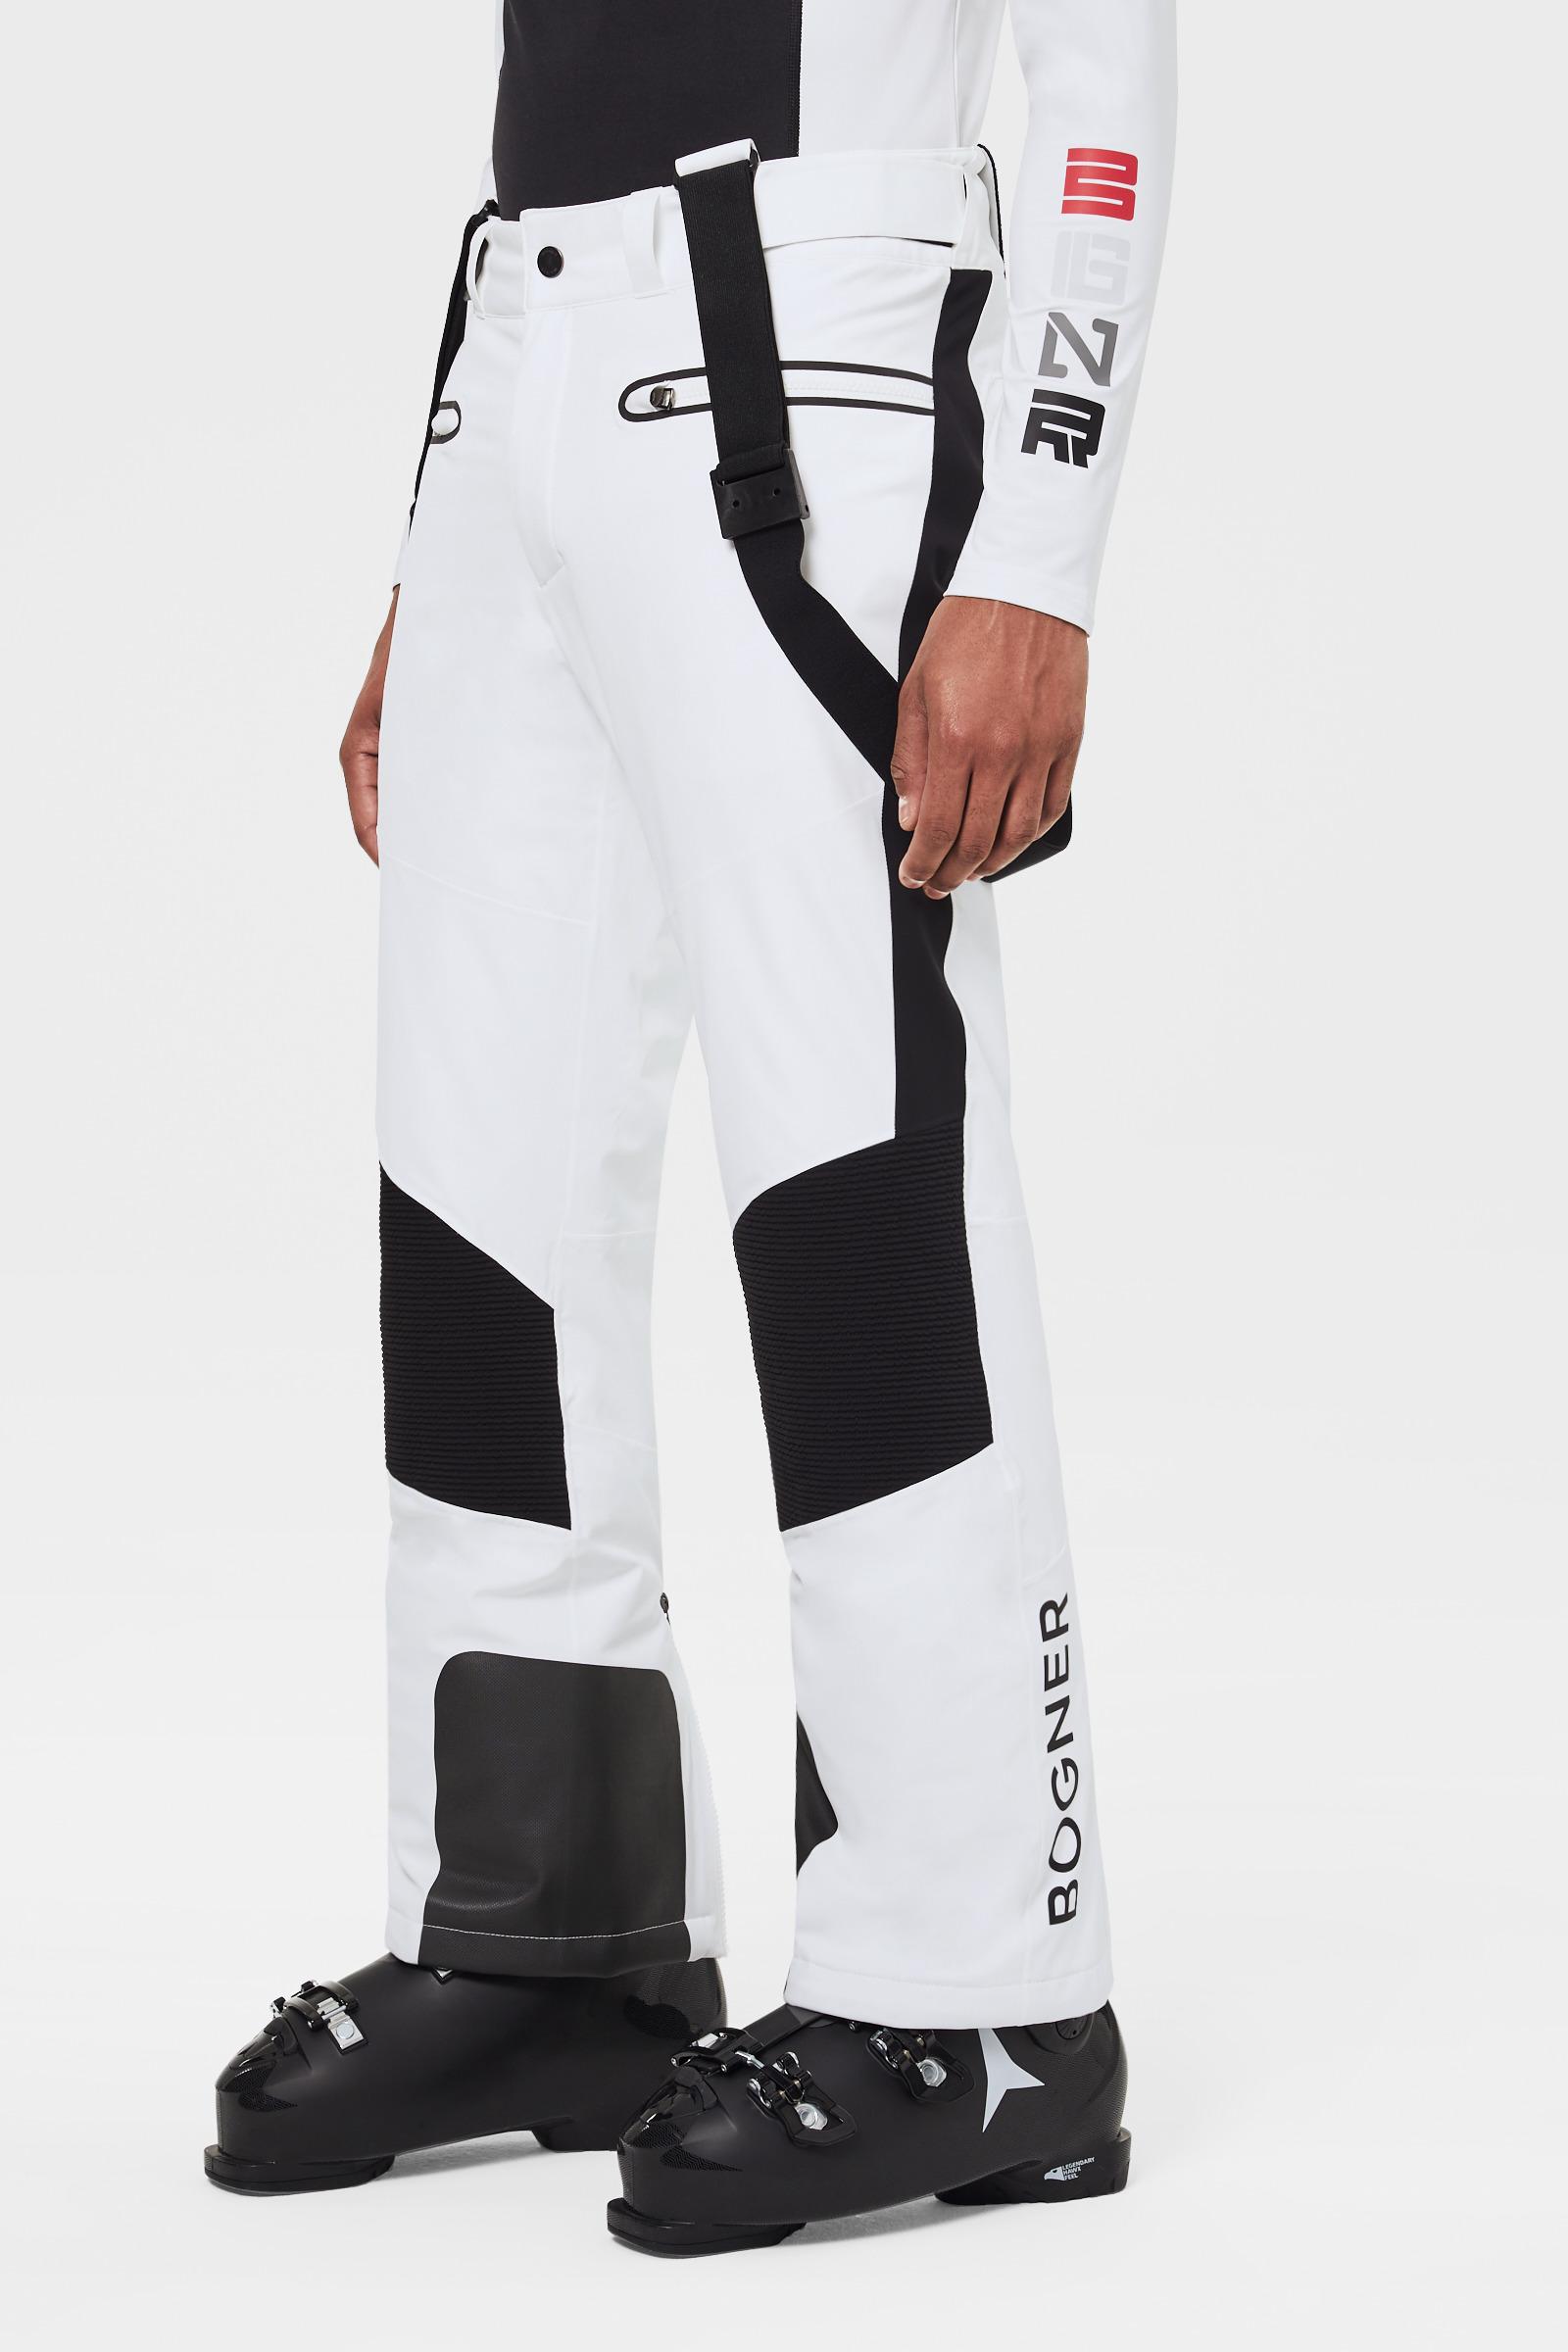 Bogner Torak Ski Pants In Off-white/black for Men | Lyst Canada